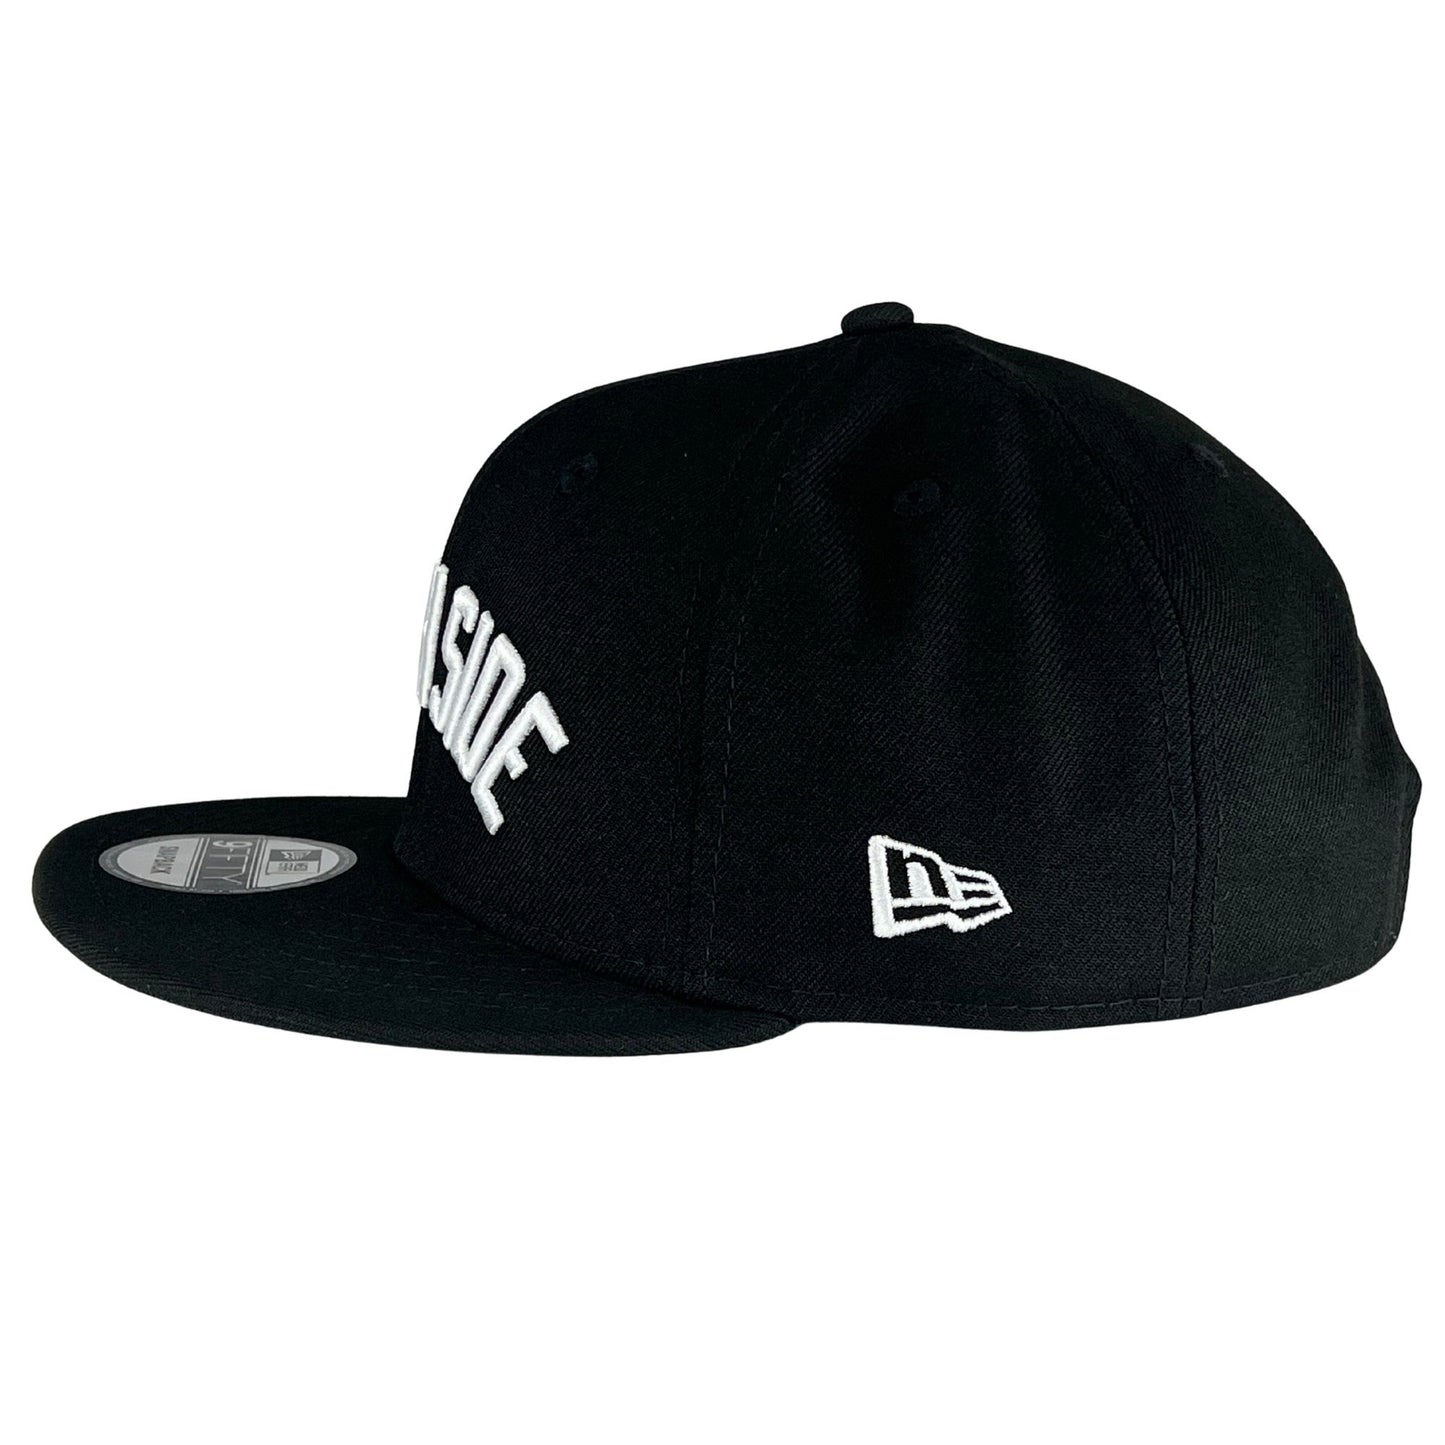 Chicago Cubs Northside New Era 9FIFTY Black Snapback Hat